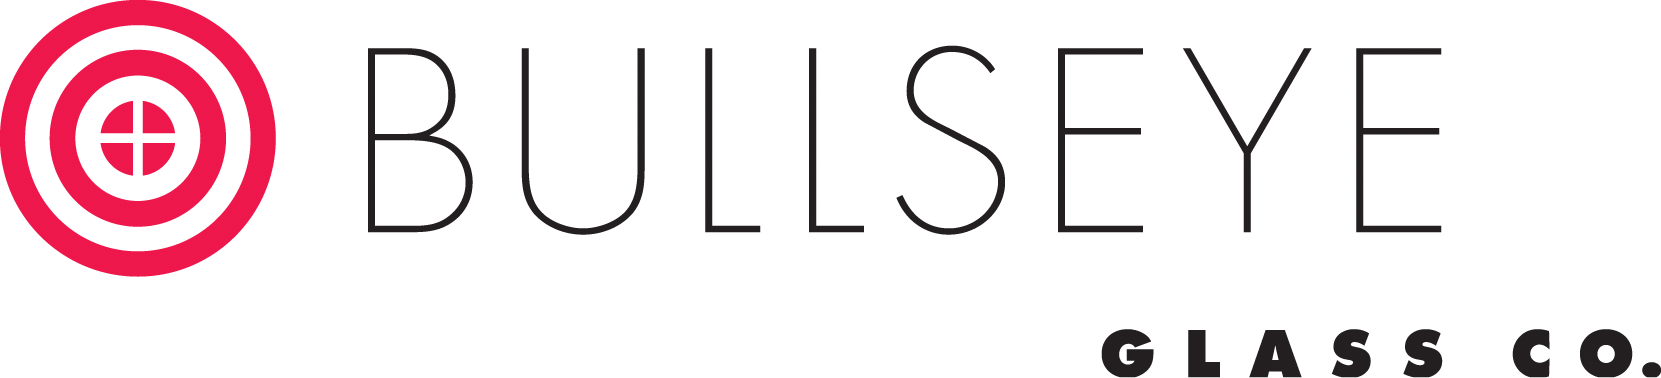 bullseye-glass-logo